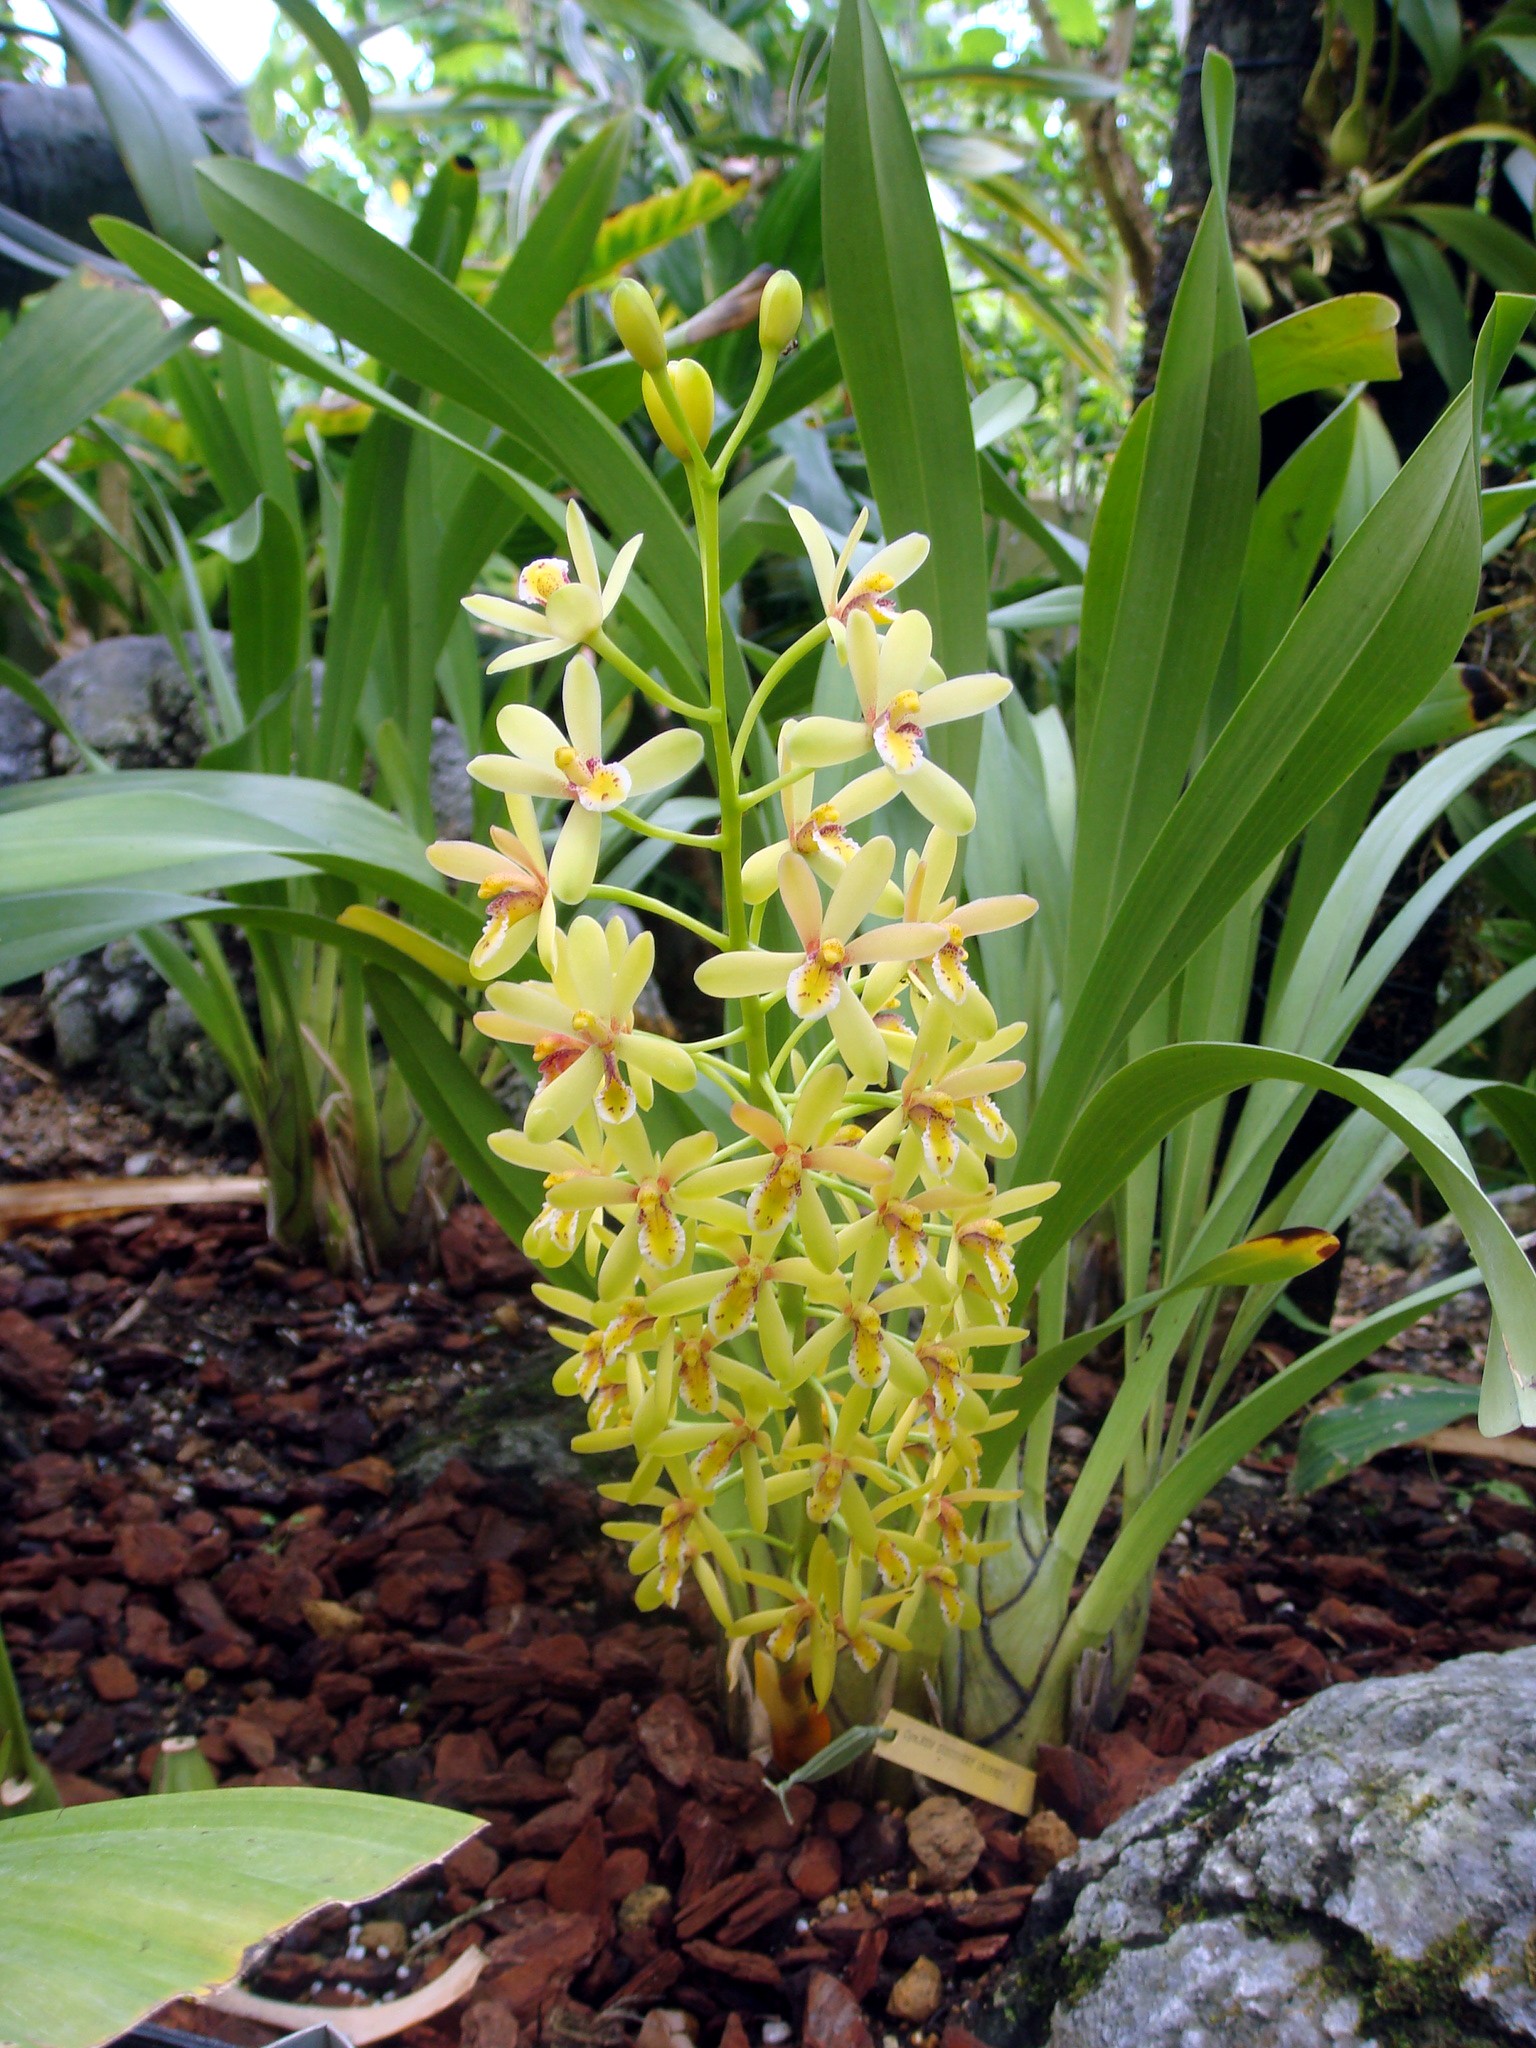 http://orchids.la.coocan.jp/Cymbidium/Cymbidium%20chloranthum/DSC02119.JPG